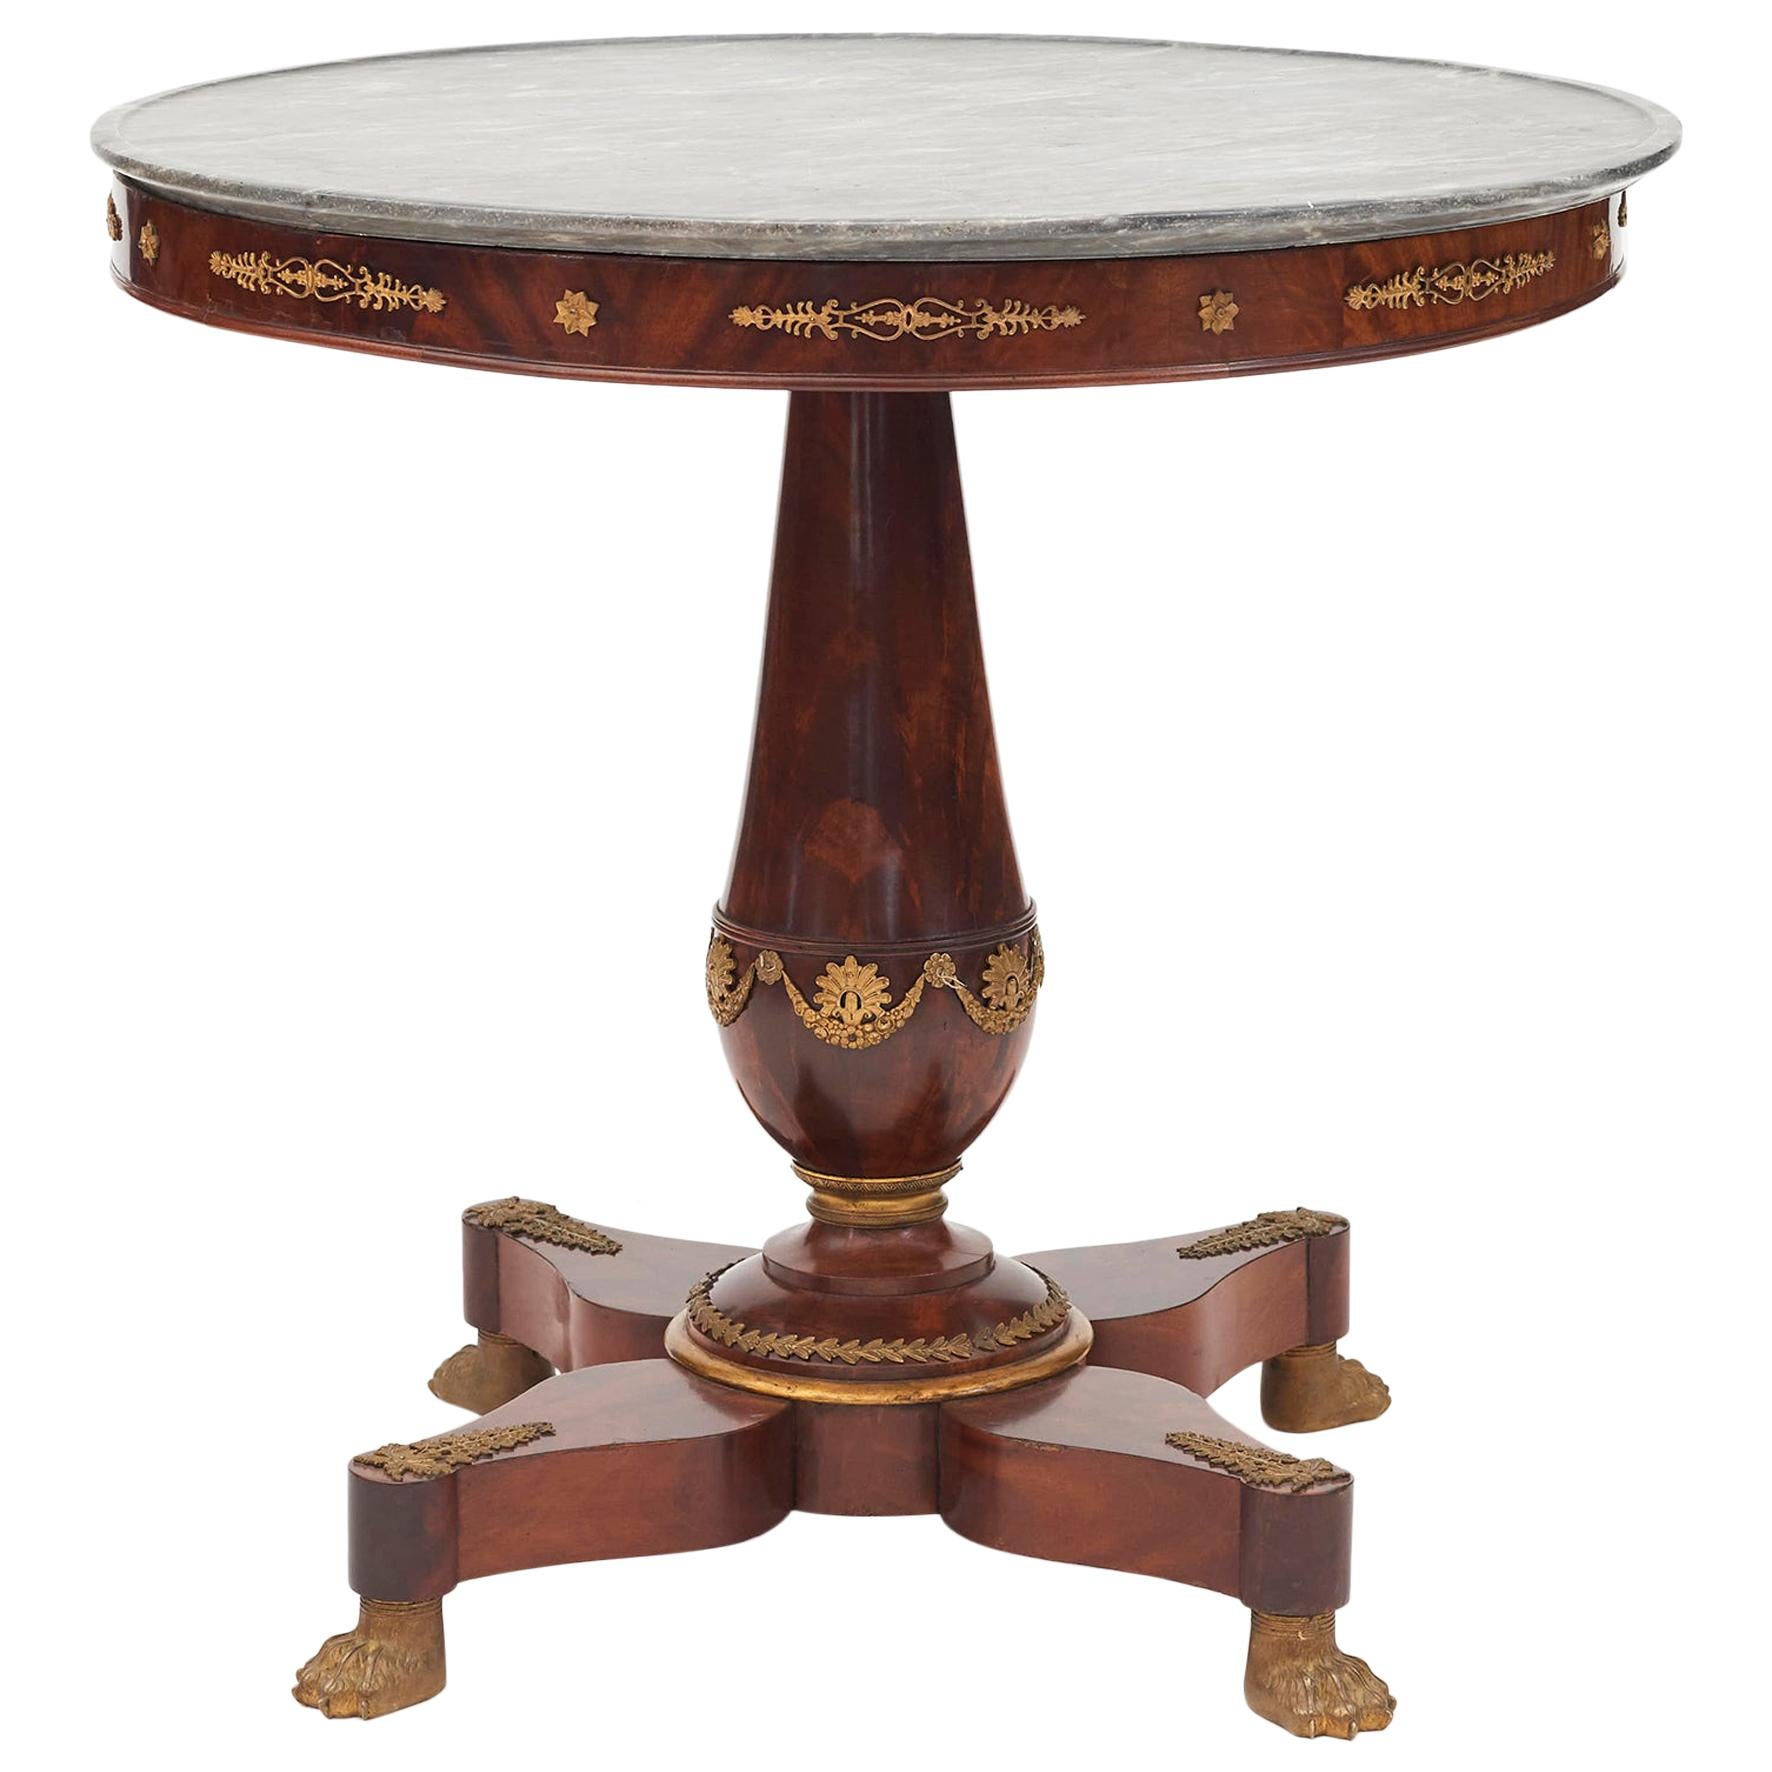 Elegant and Decorative French Empire Mahogany Center Table